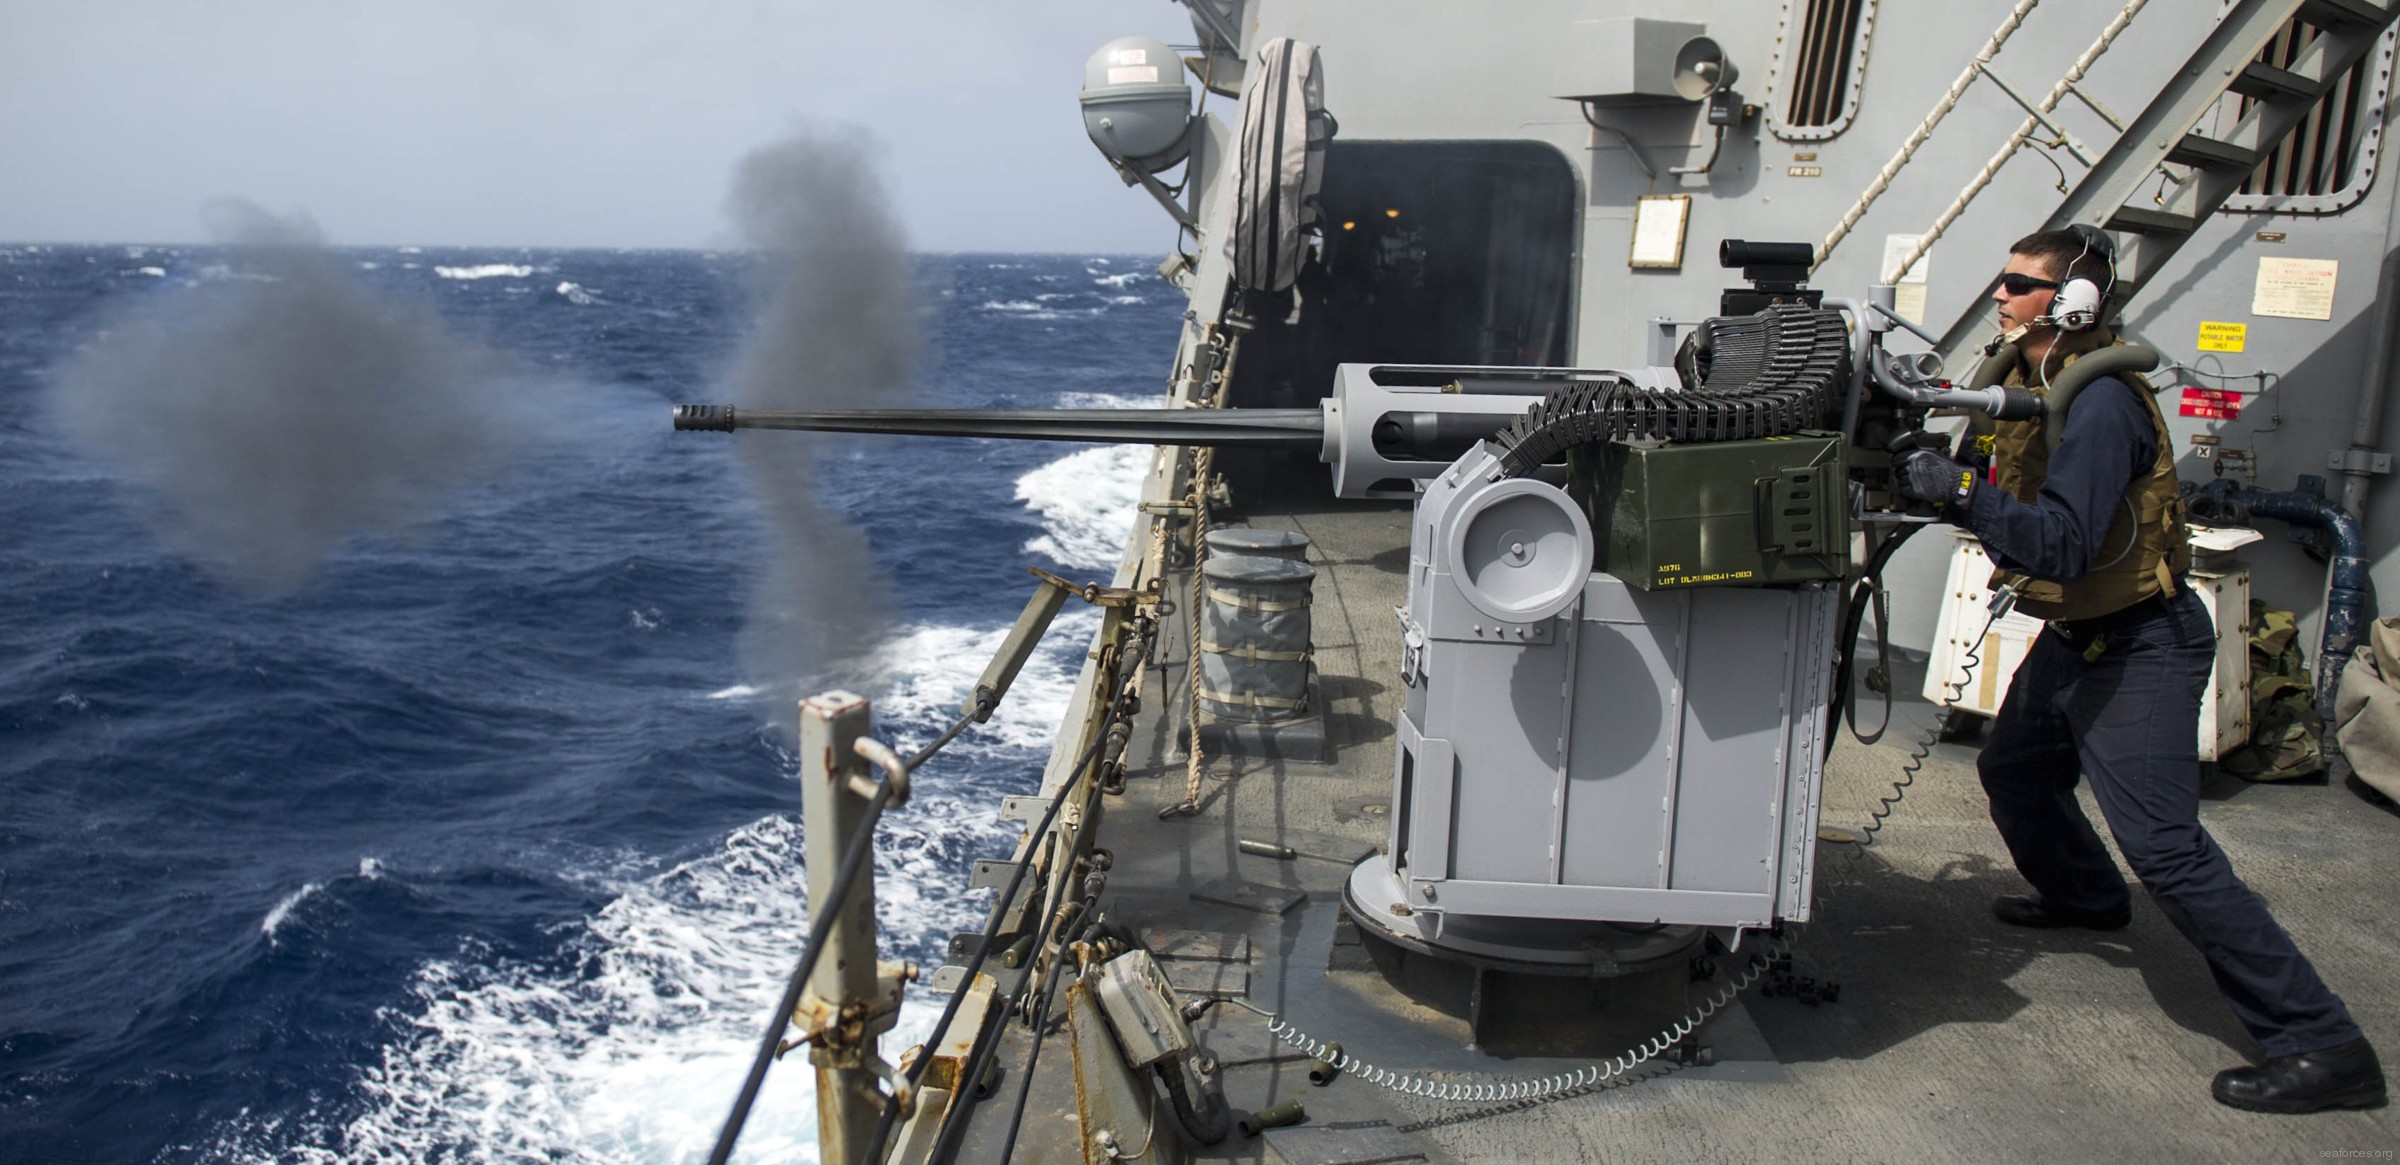 ddg-80 uss roosevelt guided missile destroyer arleigh burke class us navy 41 mark 38 25mm machine gun system